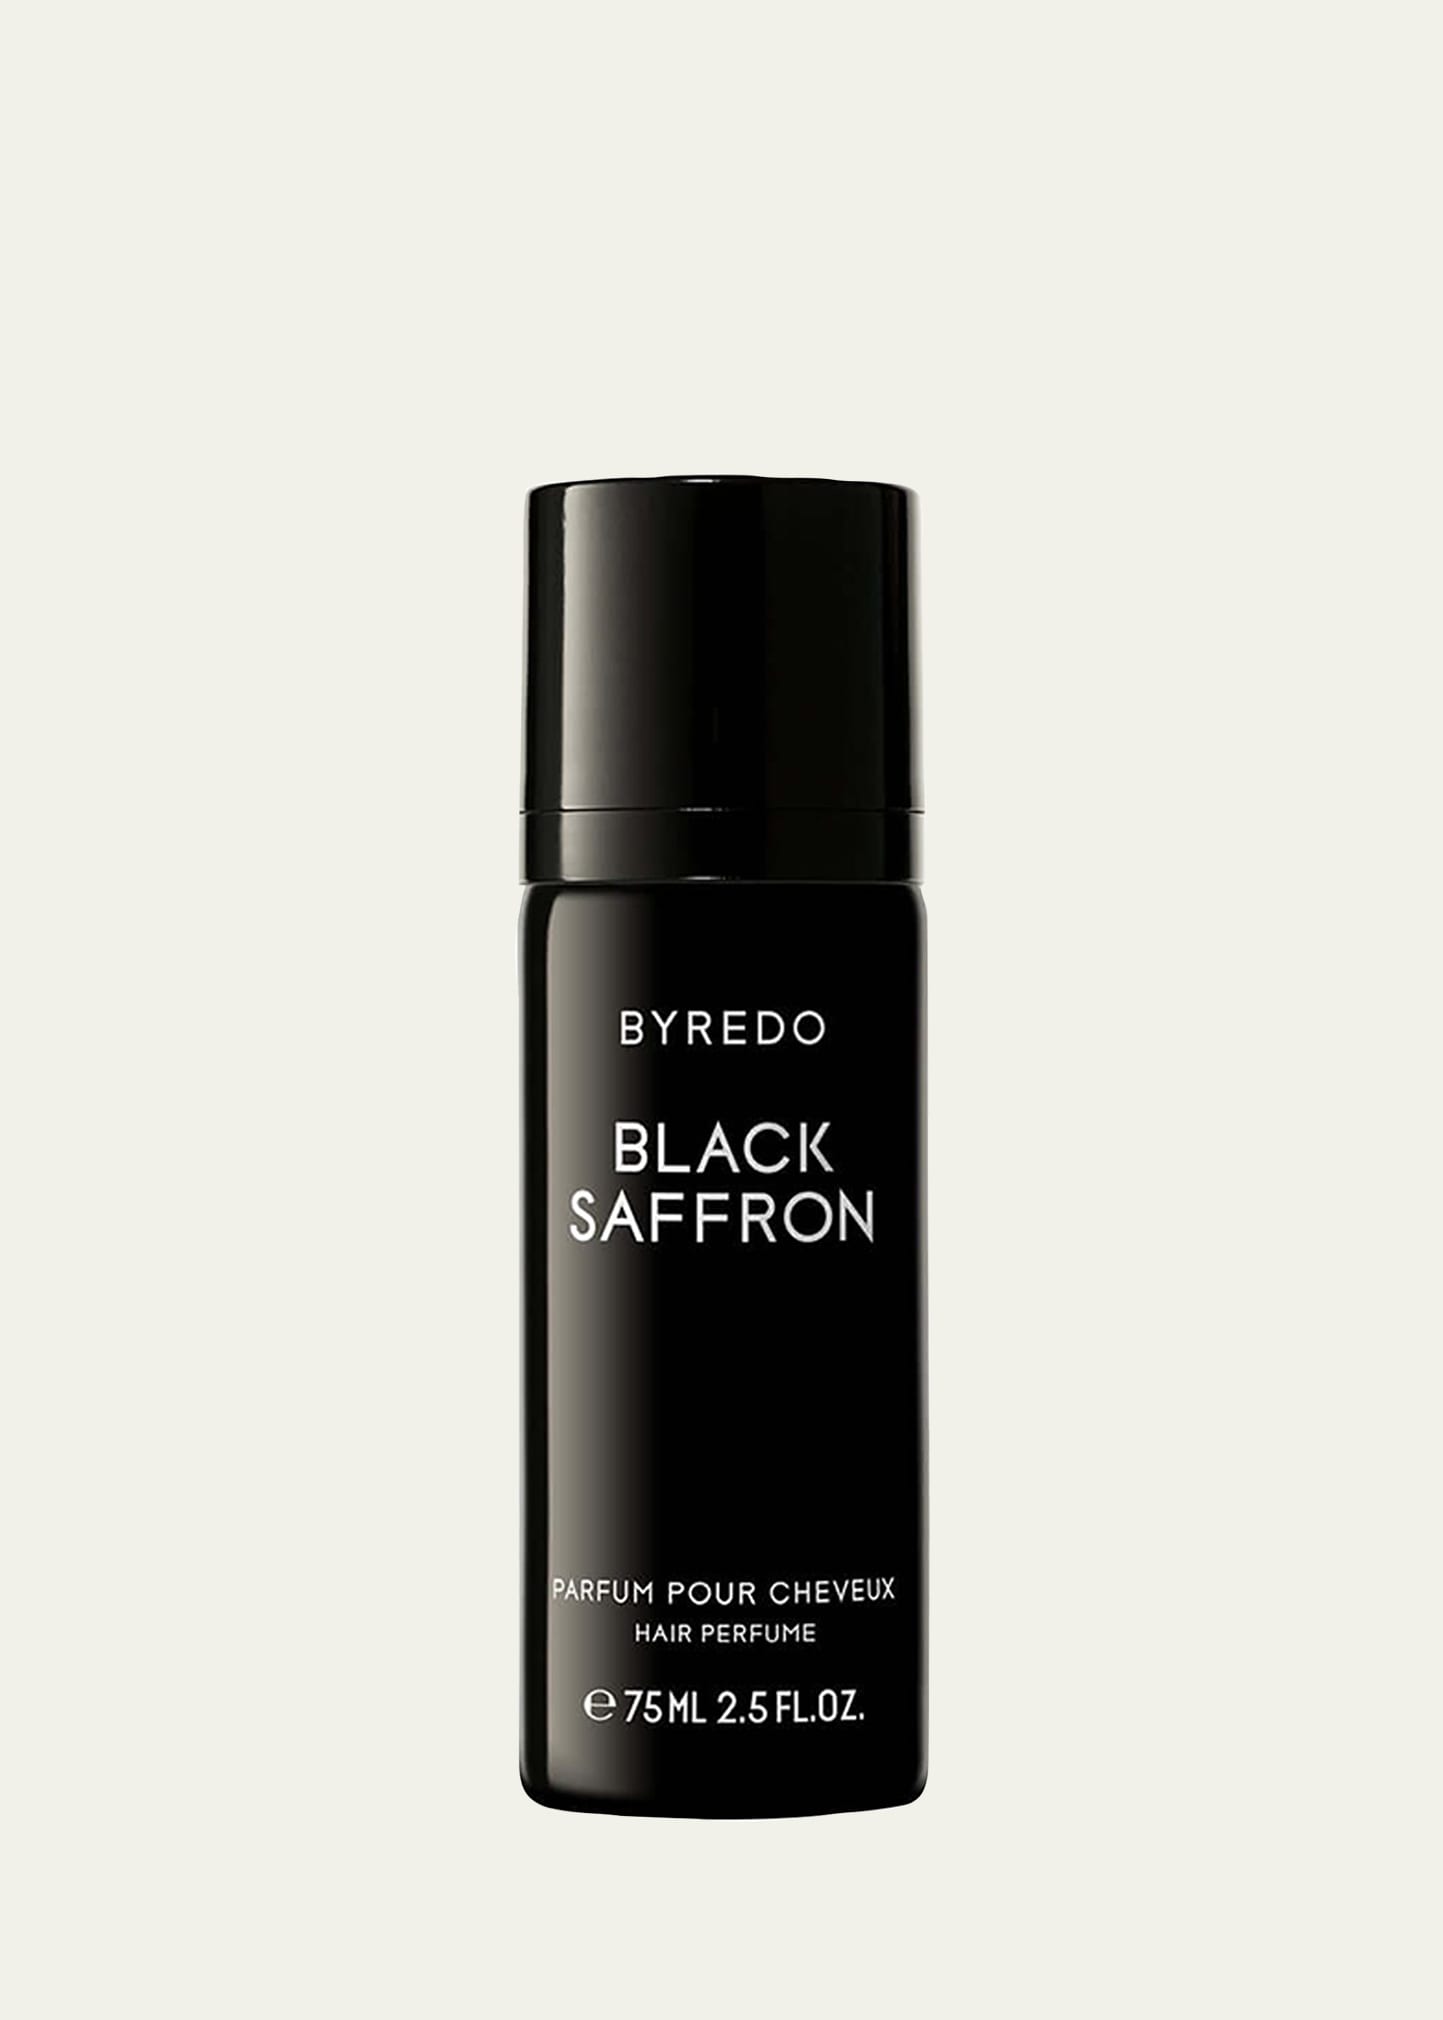 2.5 oz. Black Saffron Hair Perfume